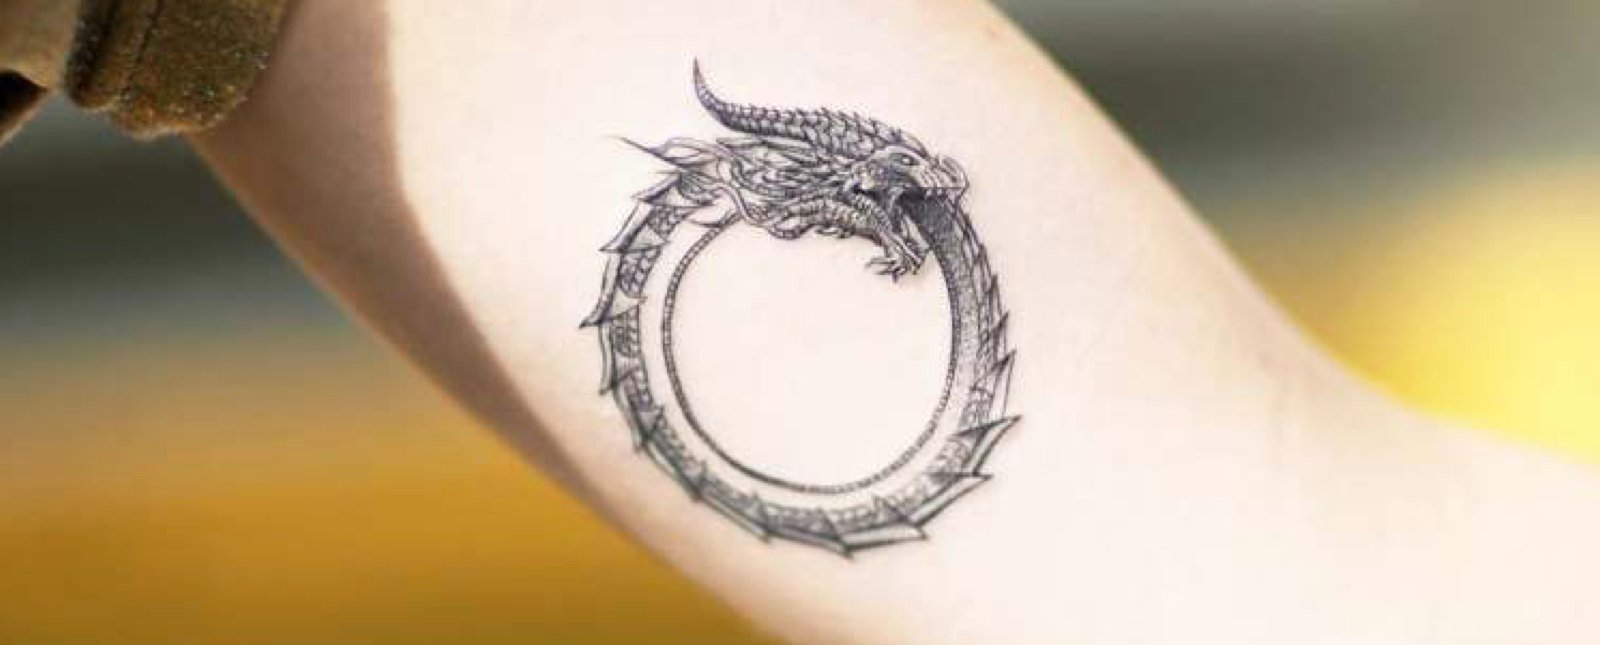 Unity symbol tattoo | Tattoos with meaning, Unity tattoo, Symbol tattoos